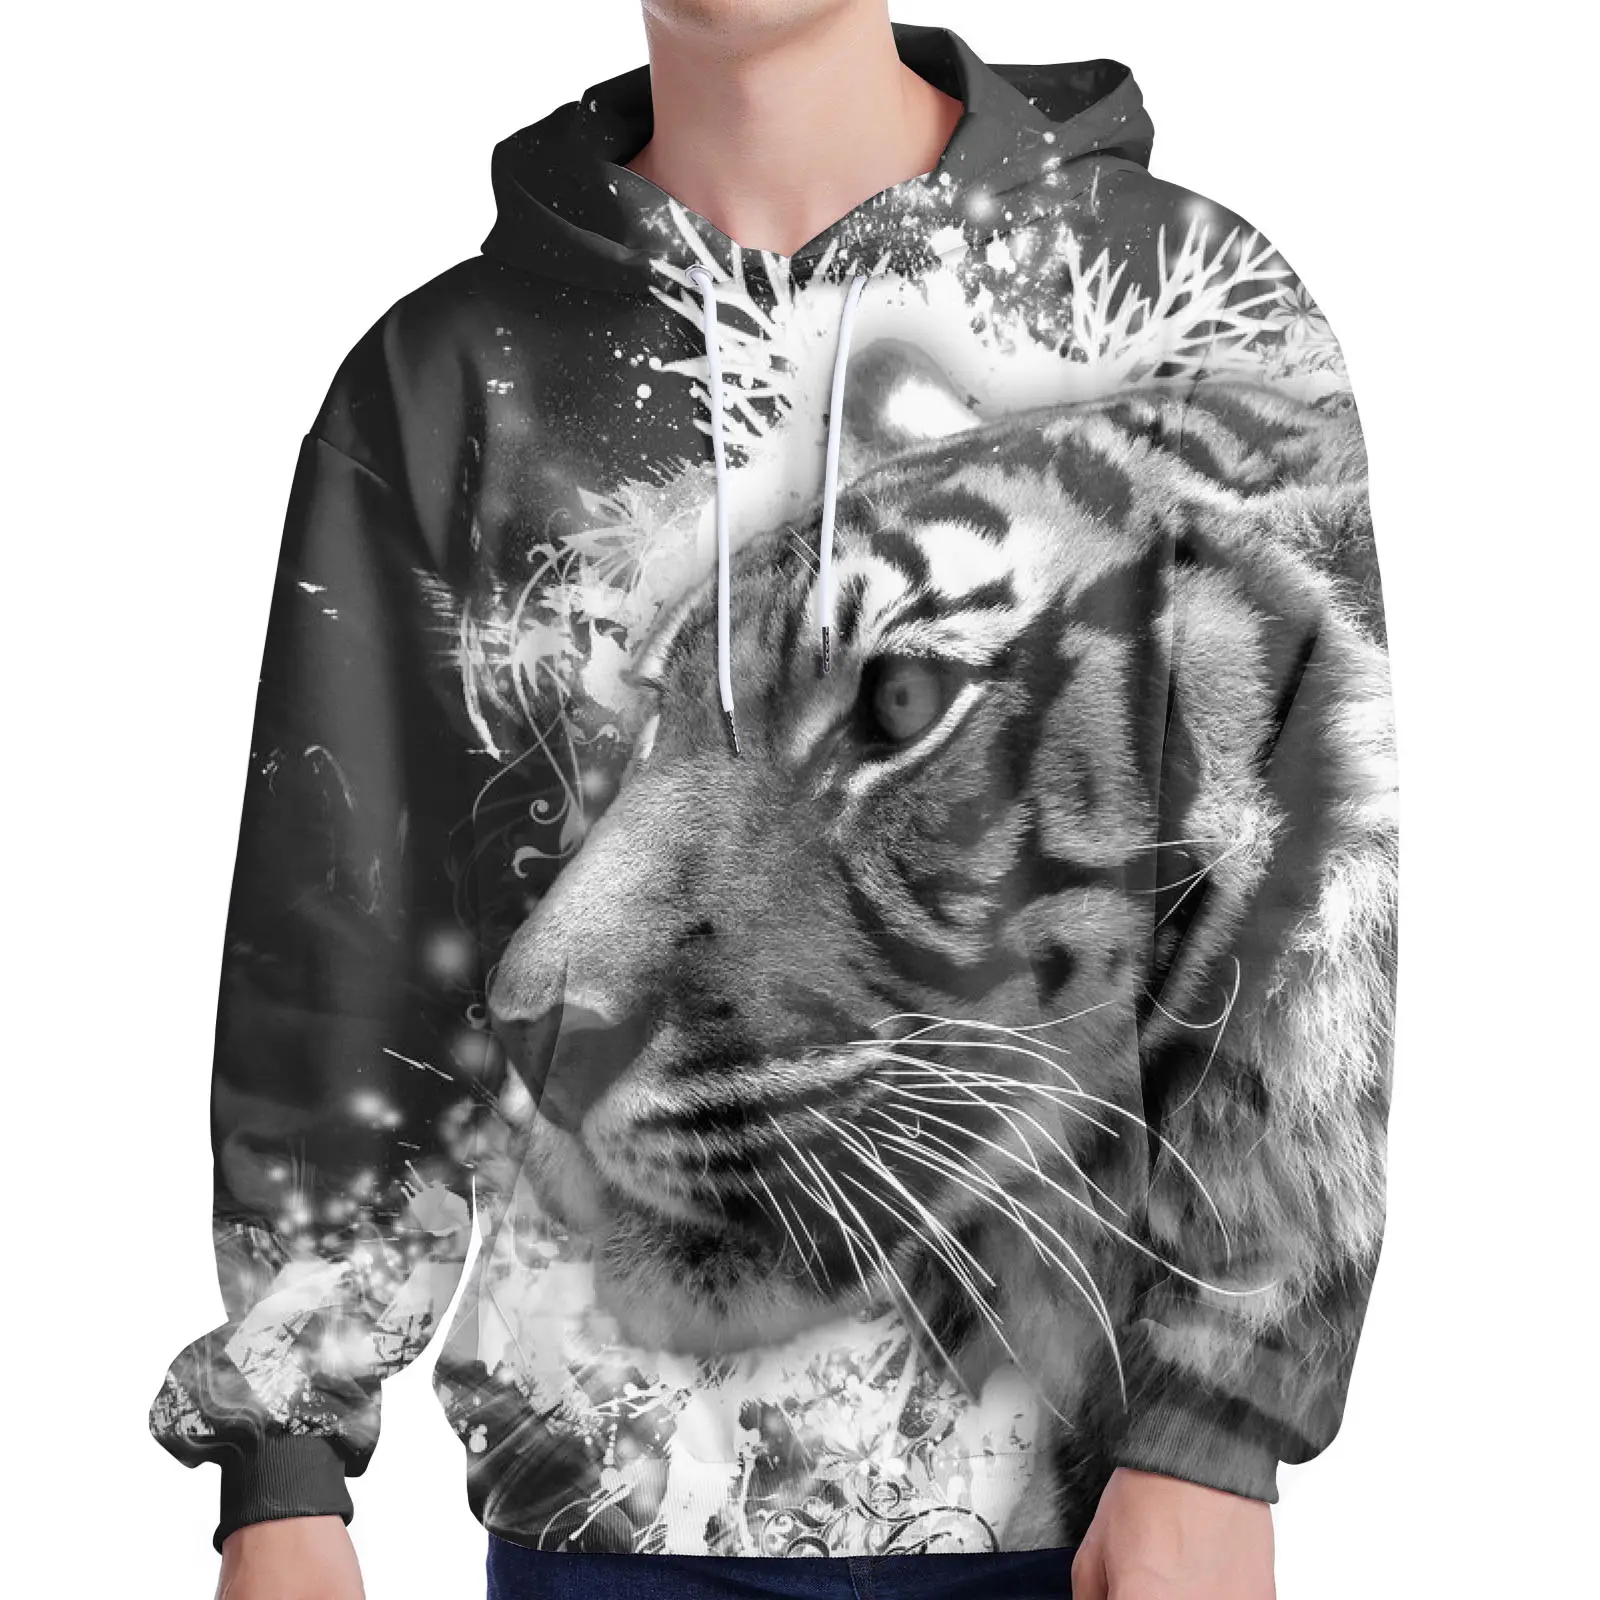 100% Polyester embossed hip hop unisex 3d tiger black pocket pullover hoodie sweatshirt